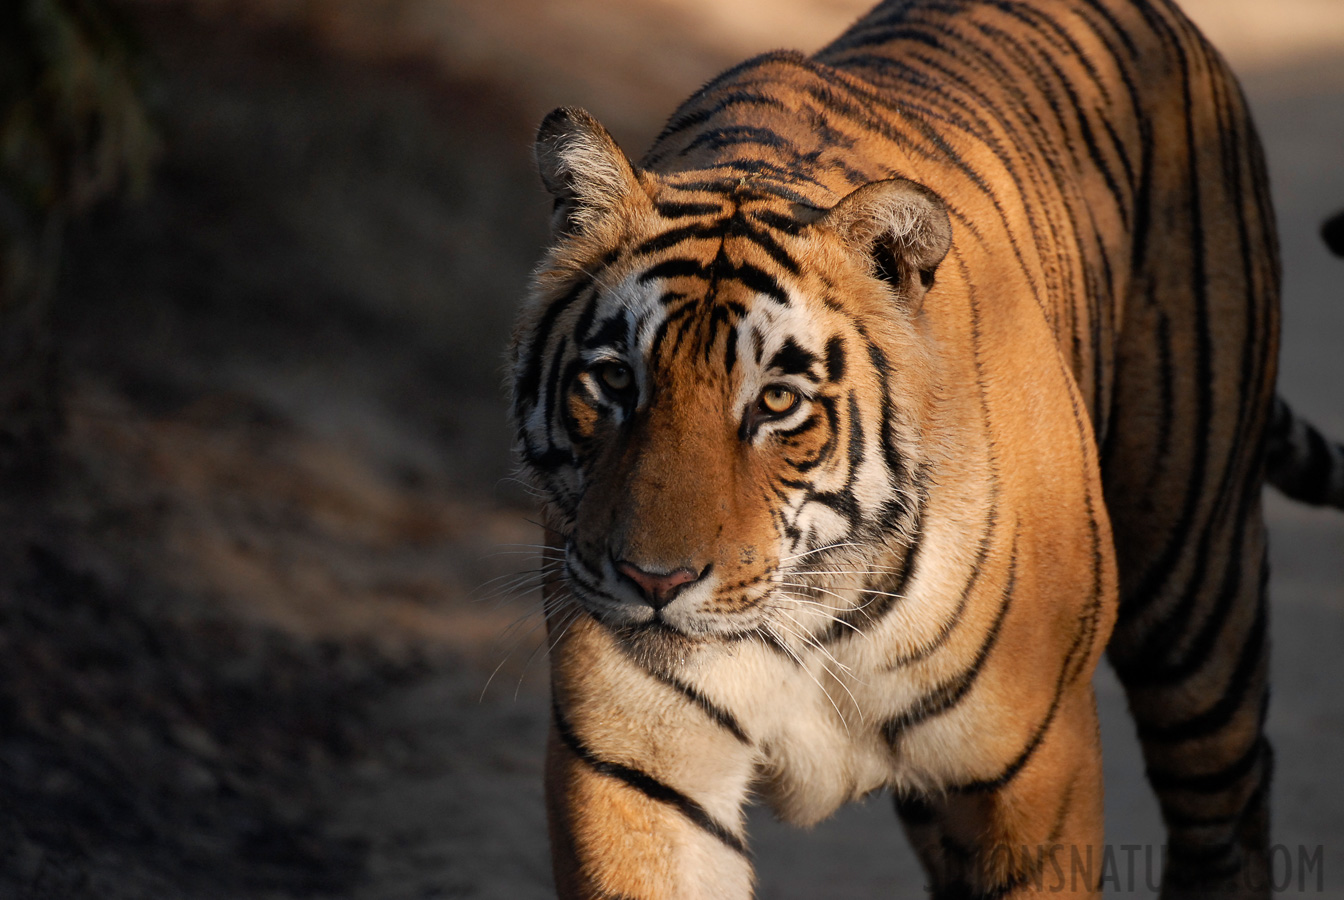 Panthera tigris tigris [400 mm, 1/640 sec at f / 4.0, ISO 400]